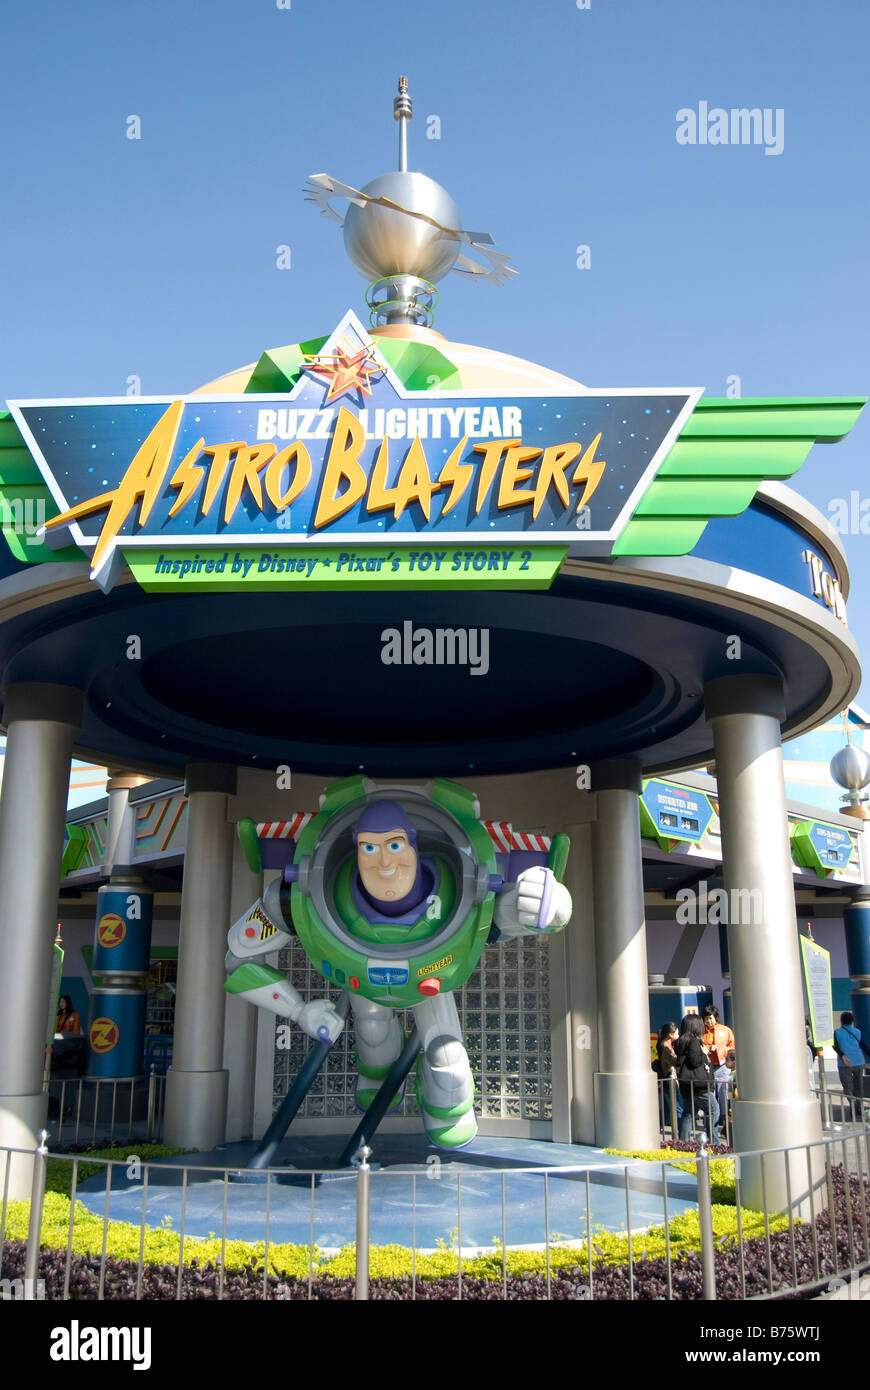 Buzz Lightyear Astro Blasters avventura interattiva, Tomorrowland, Hong Kong Disneyland Resort, l'Isola di Lantau, Hong Kong, Cina Foto Stock